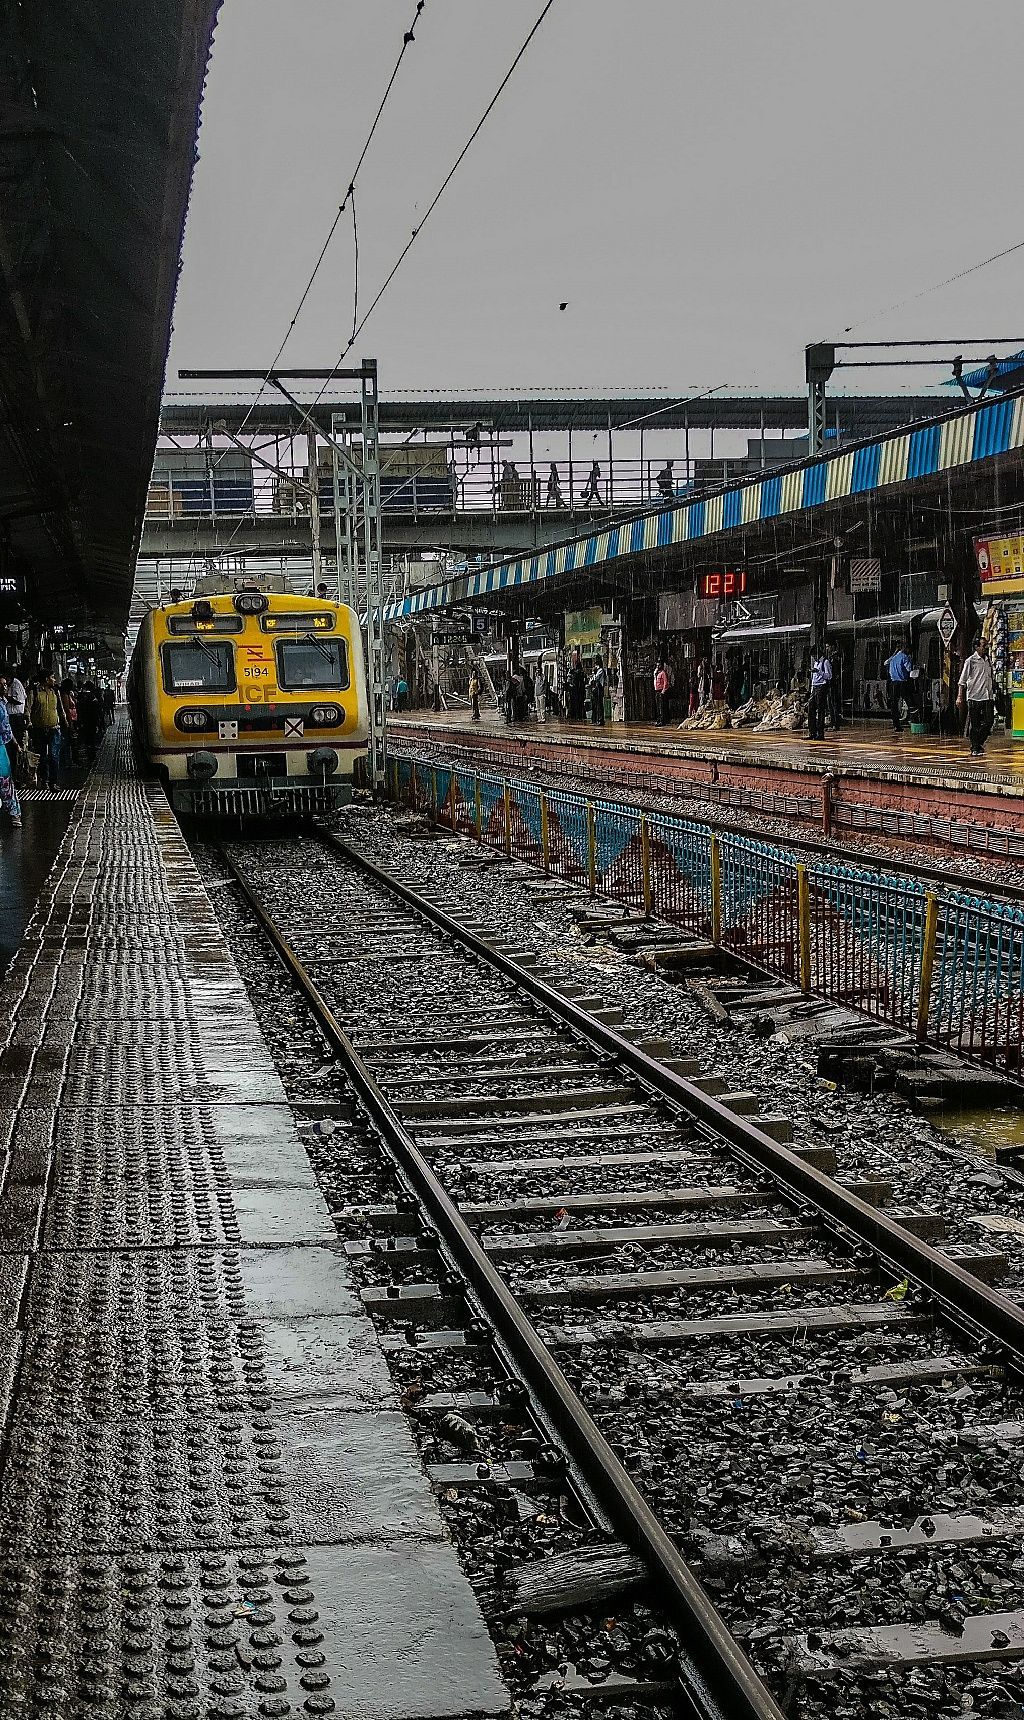 MUMBAI LOCAL. #mumbai #localtrain #train #city. City life photography, Train photography, Mumbai city